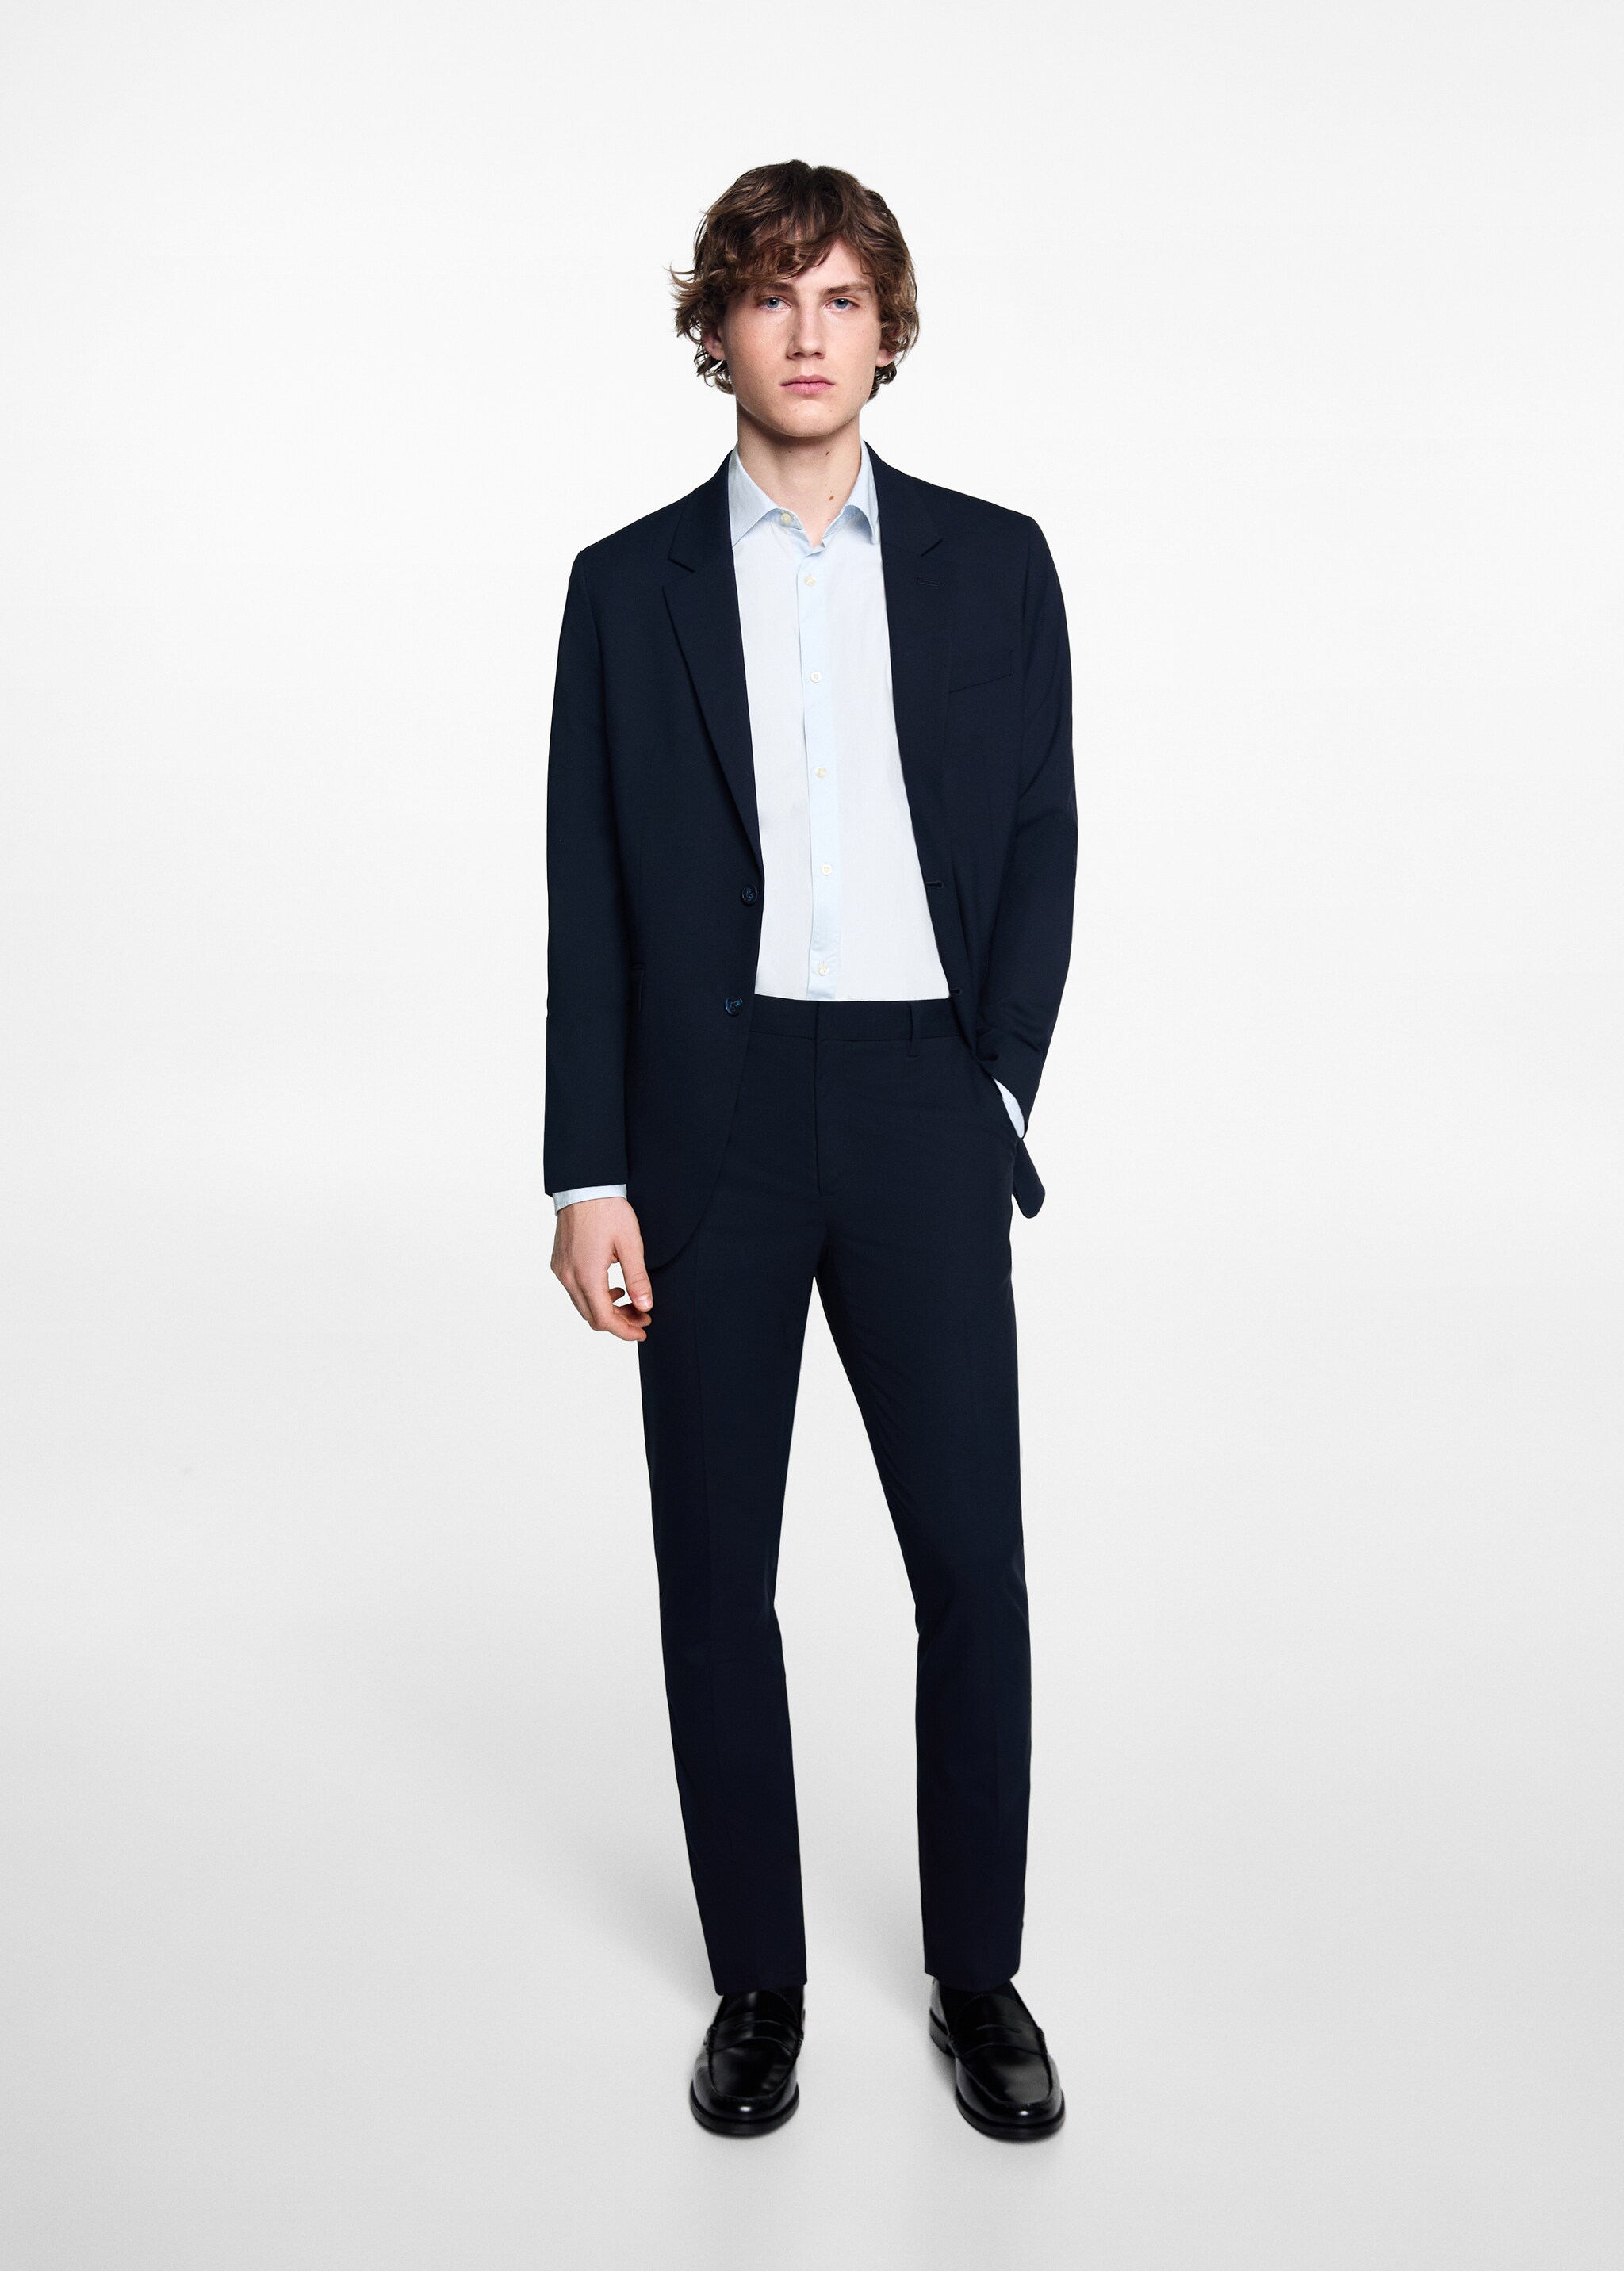  Suit trousers - Общий план